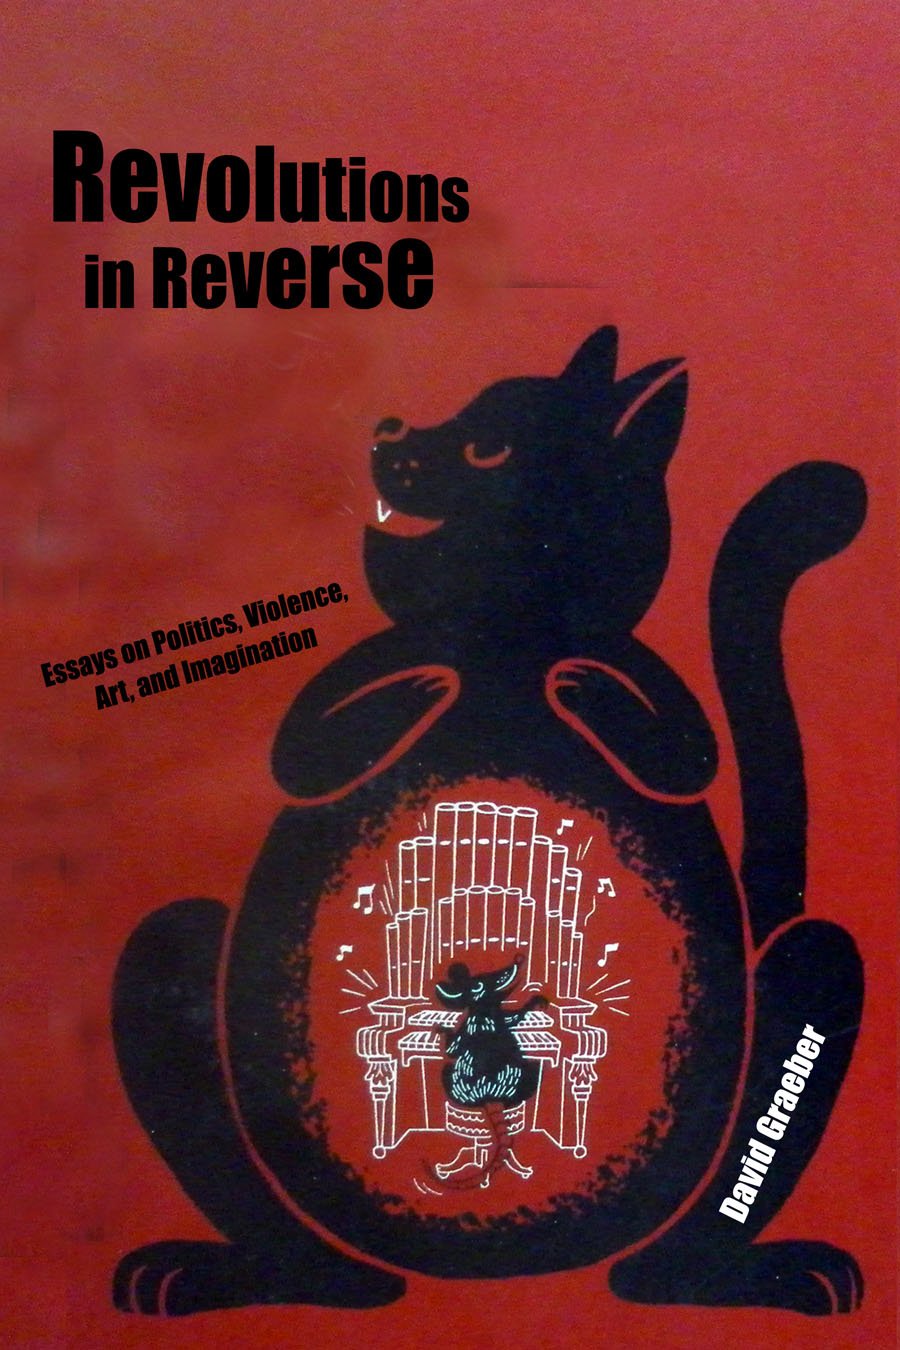 revolutions in reverse - book cover.jpg